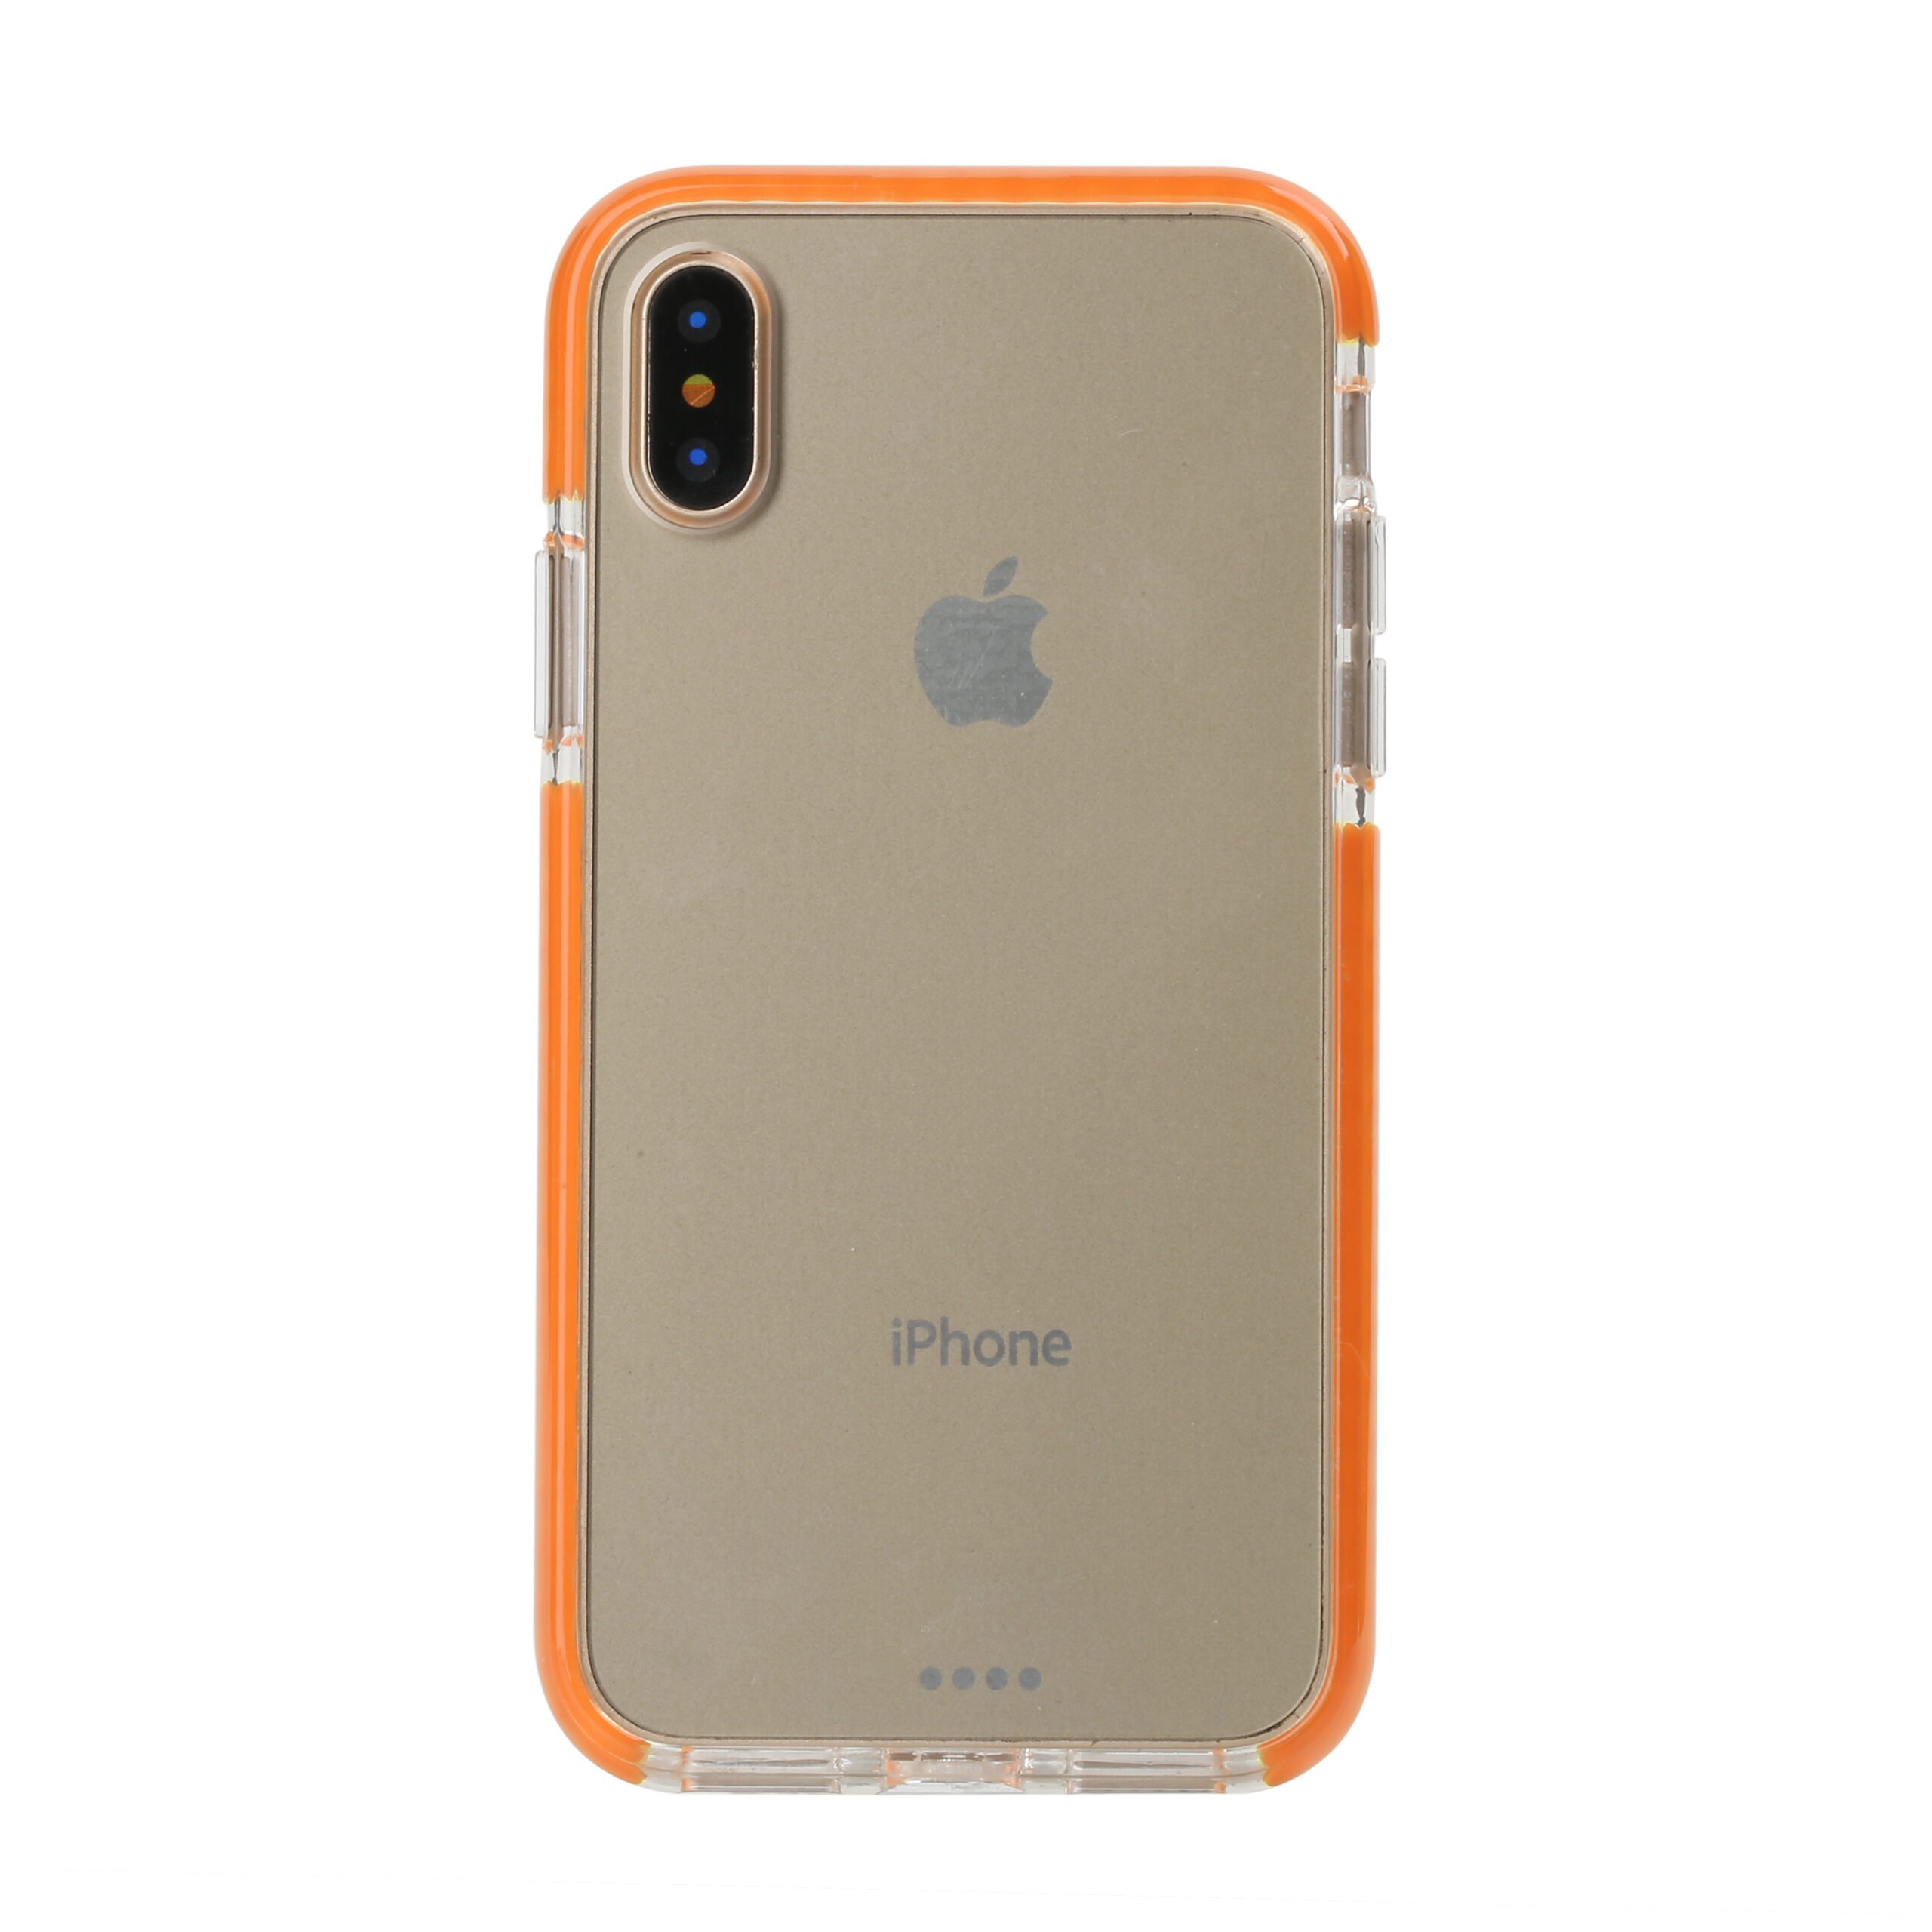 Base BorderLine - Dual Border Impact Protection for iPhone X - Orange